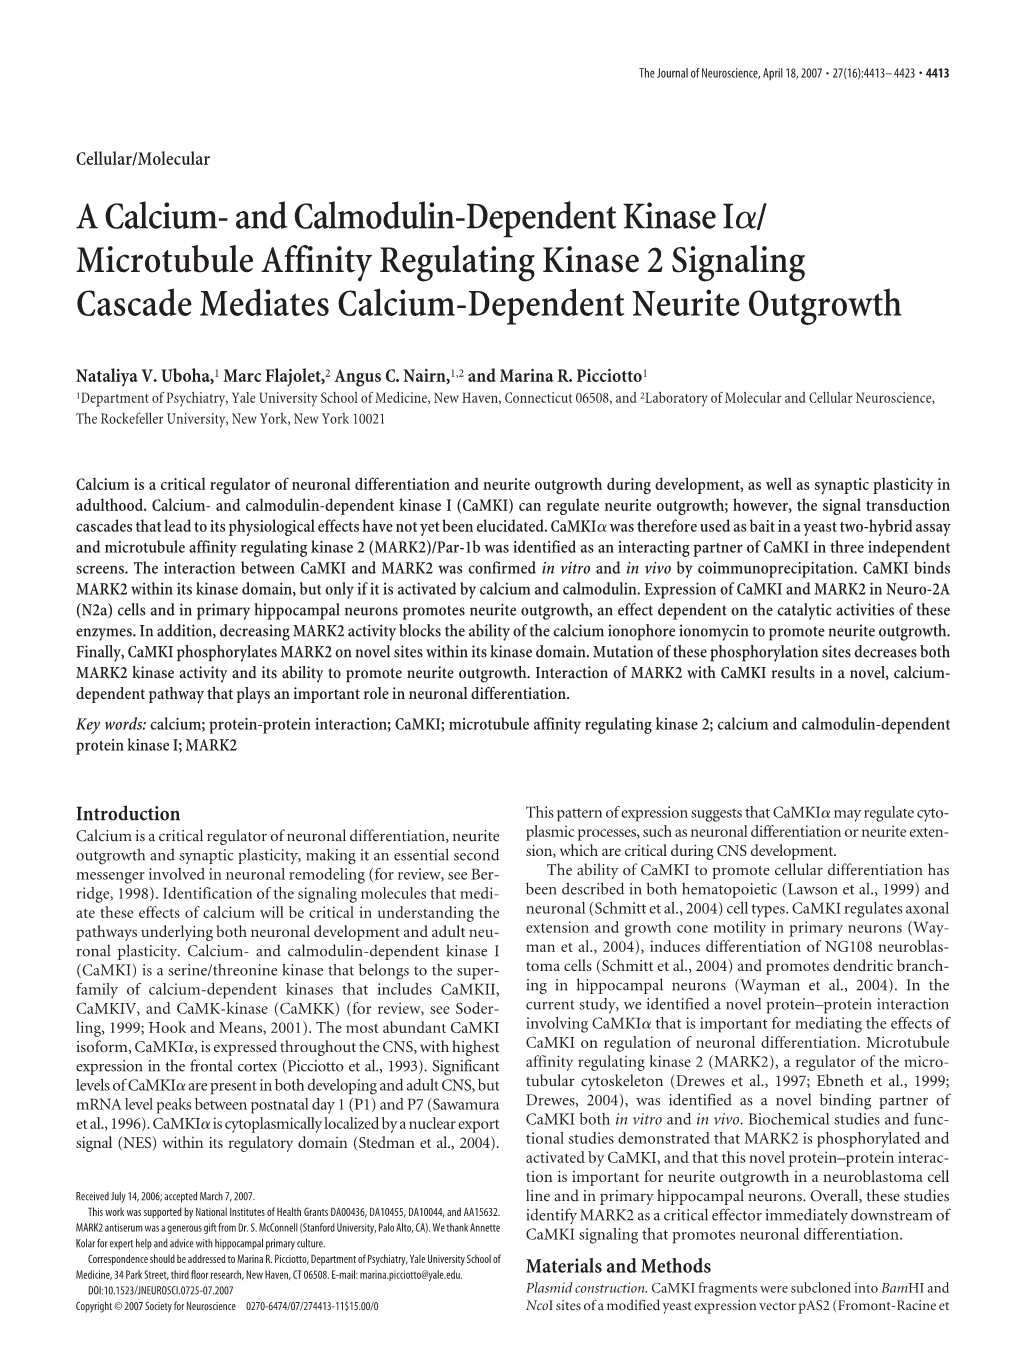 A Calcium- and Calmodulin-Dependent Kinase I␣/ Microtubule Affinity Regulating Kinase 2 Signaling Cascade Mediates Calcium-Dependent Neurite Outgrowth